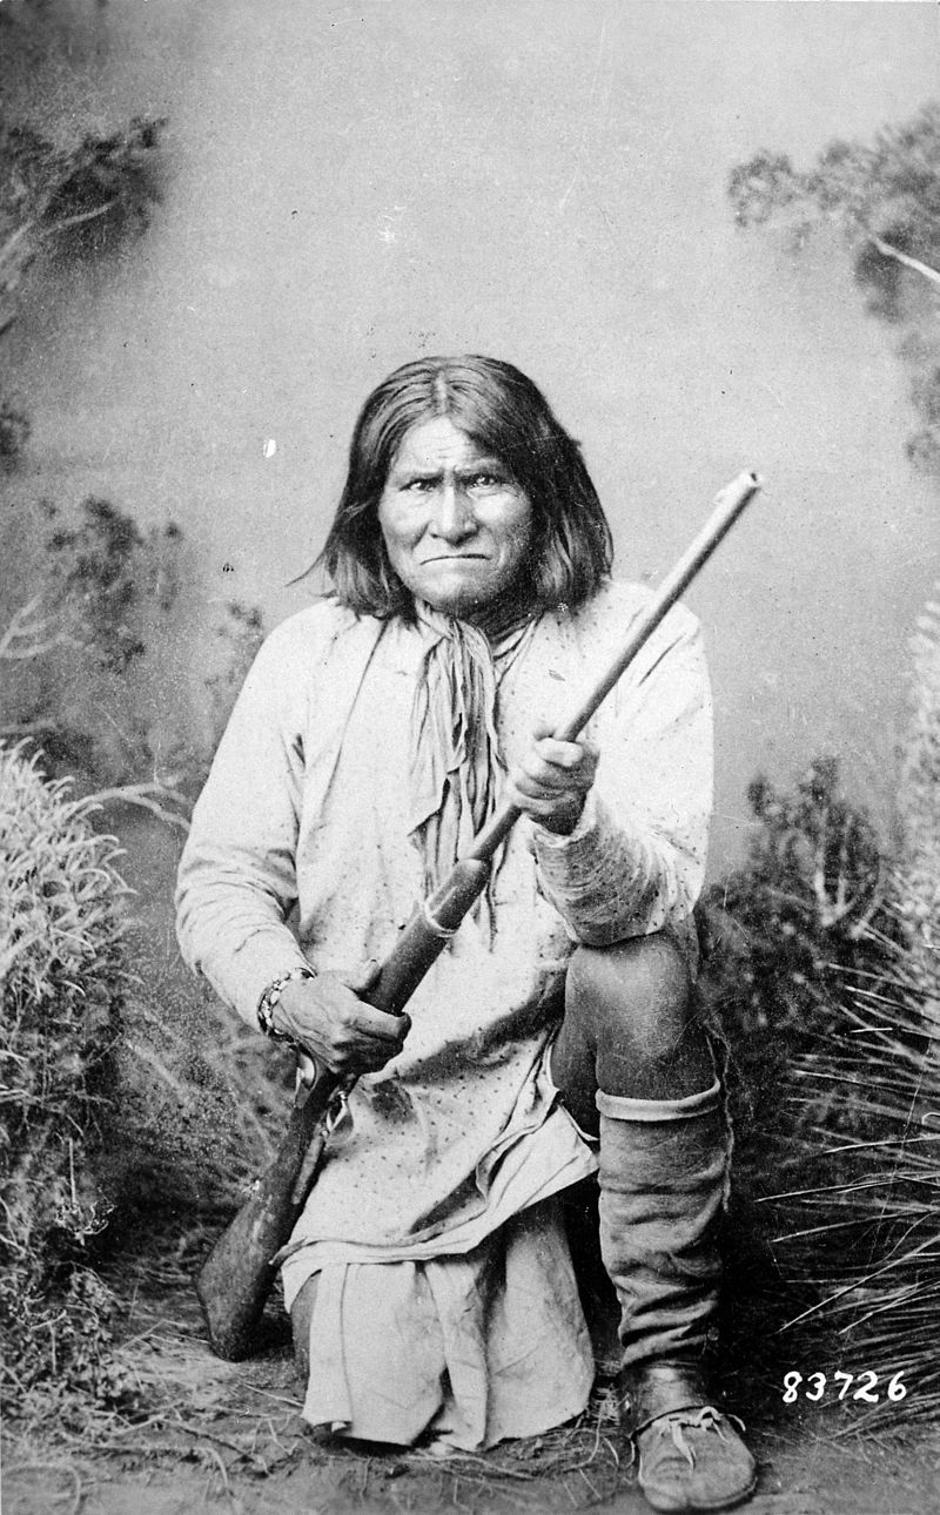 Geronimo | Author: Wikipedia